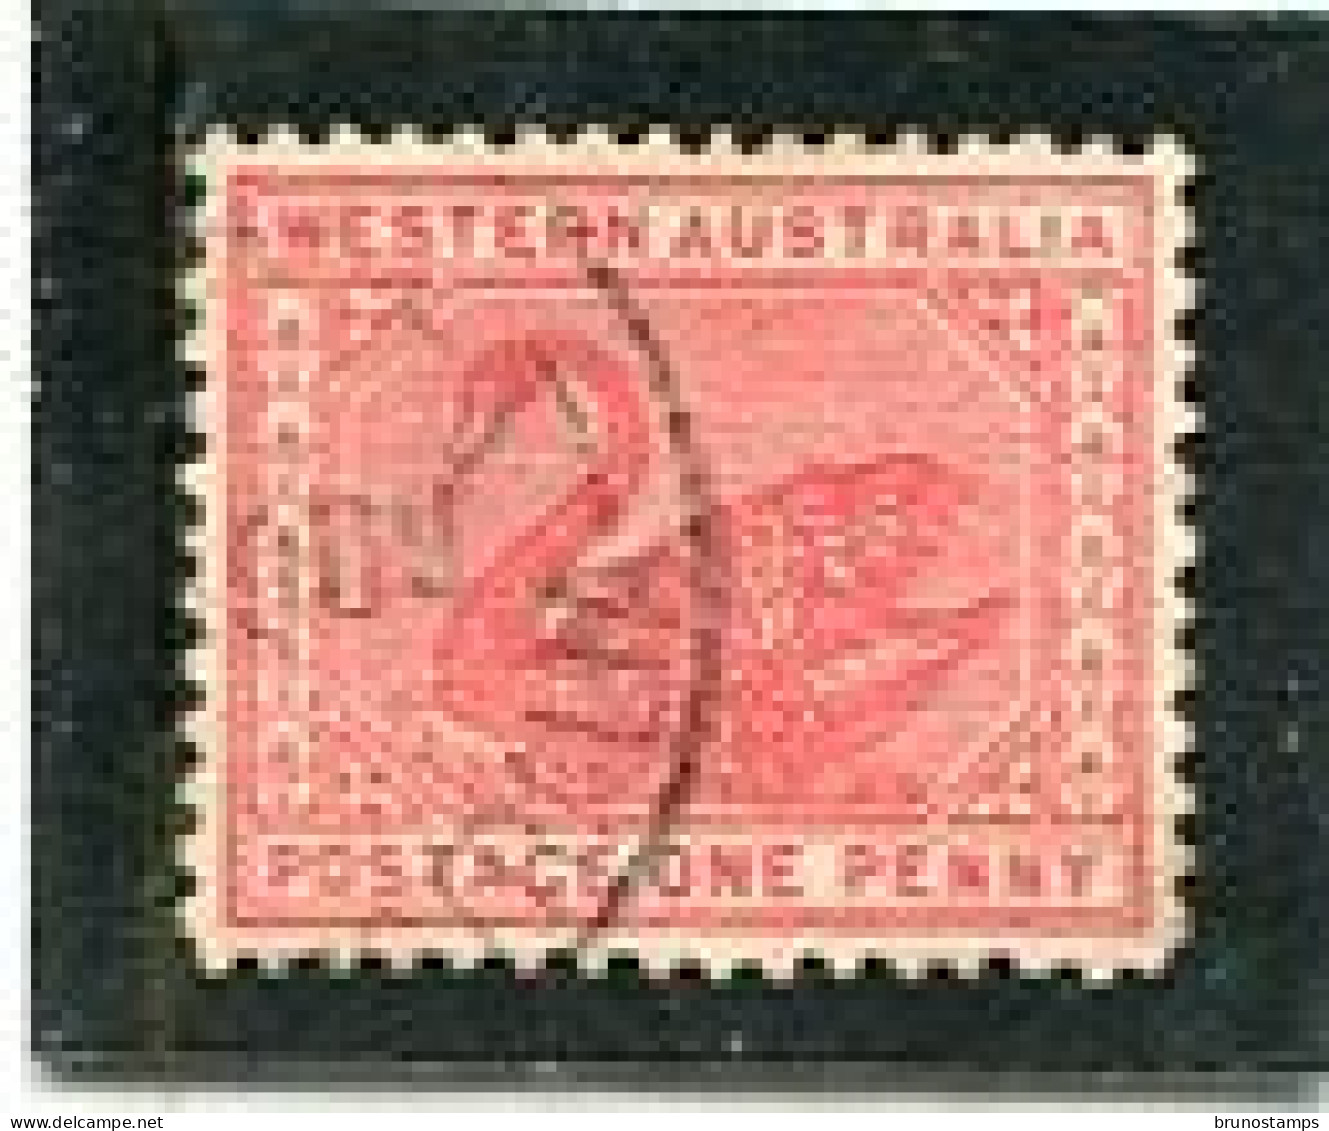 8AUSTRALIA/WESTERN AUSTRALIA - 1905  1d   ROSE-PINK  PERF  12x12 1/2  FINE  USED   SG 139 - Gebraucht